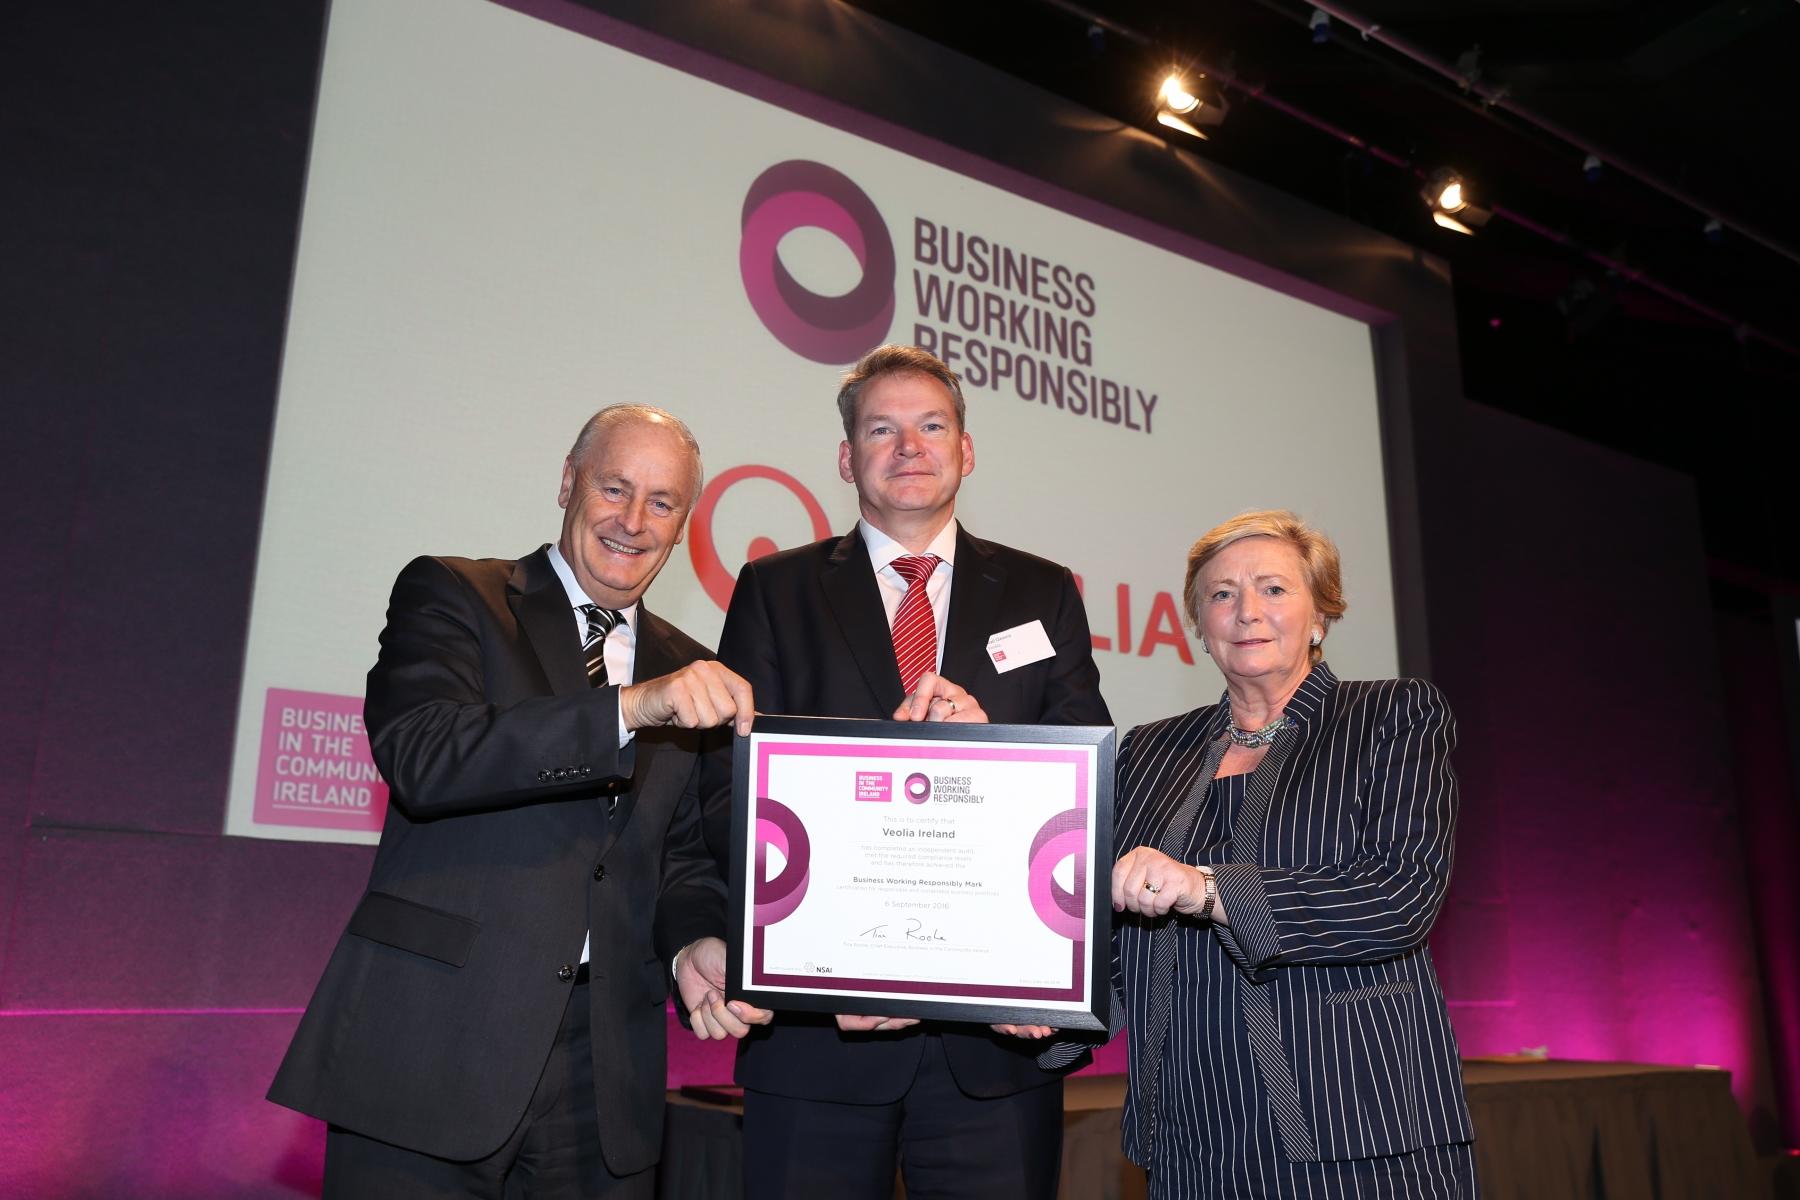 Niall Gleeson, Veolia Ireland, receives the Responsible Business Mark from BITC Ireland